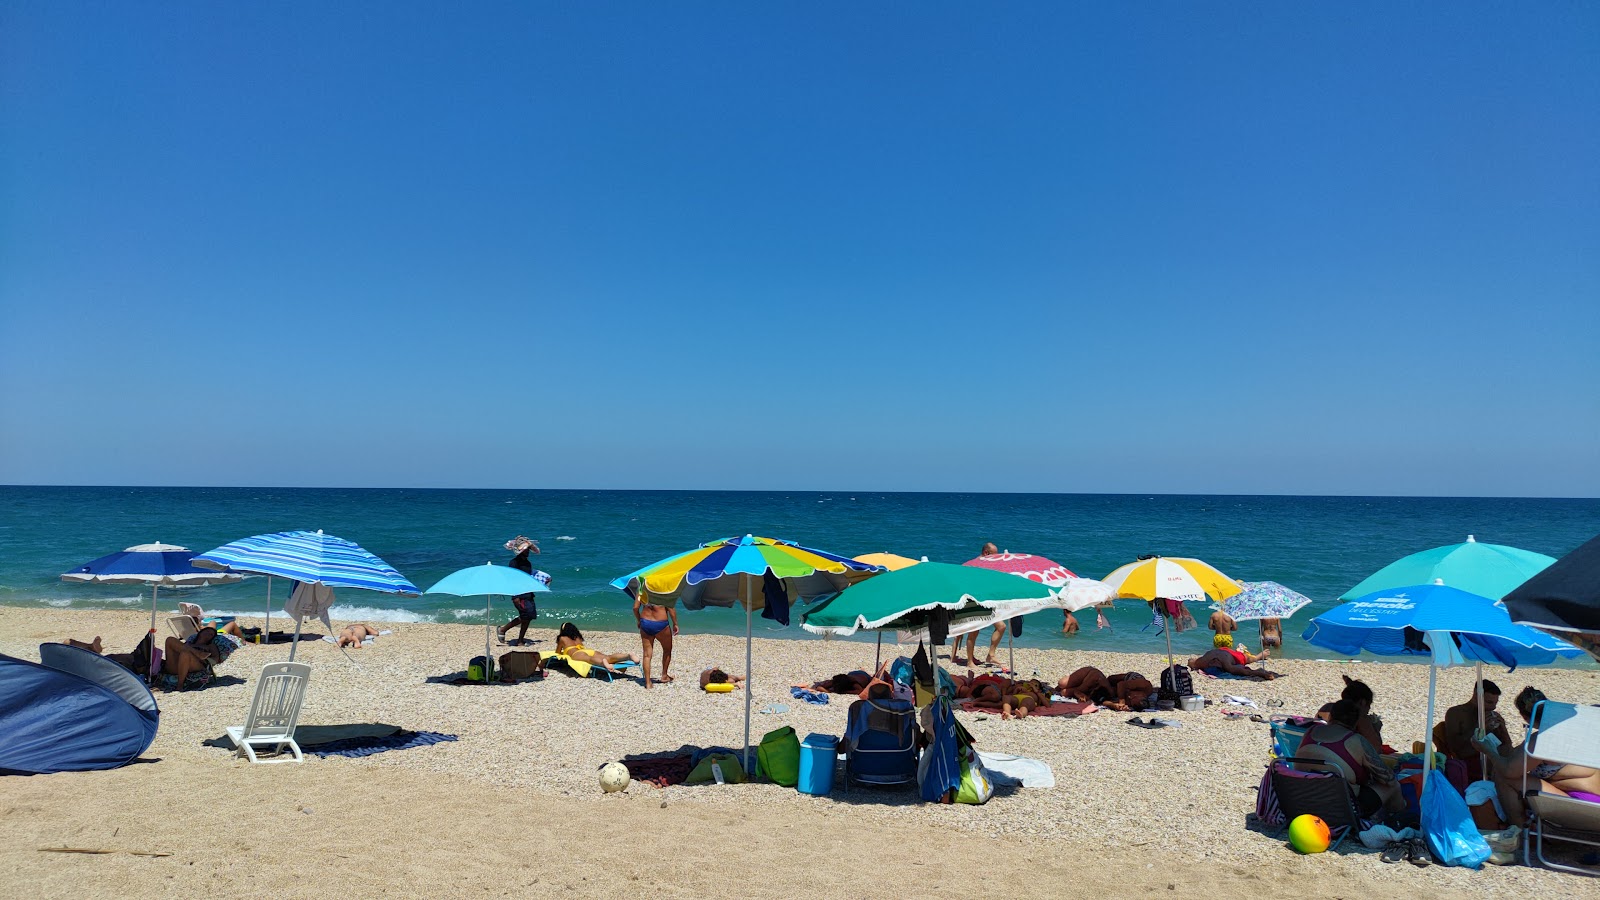 Foto de Spiaggia dei Scossicci - lugar popular entre los conocedores del relax